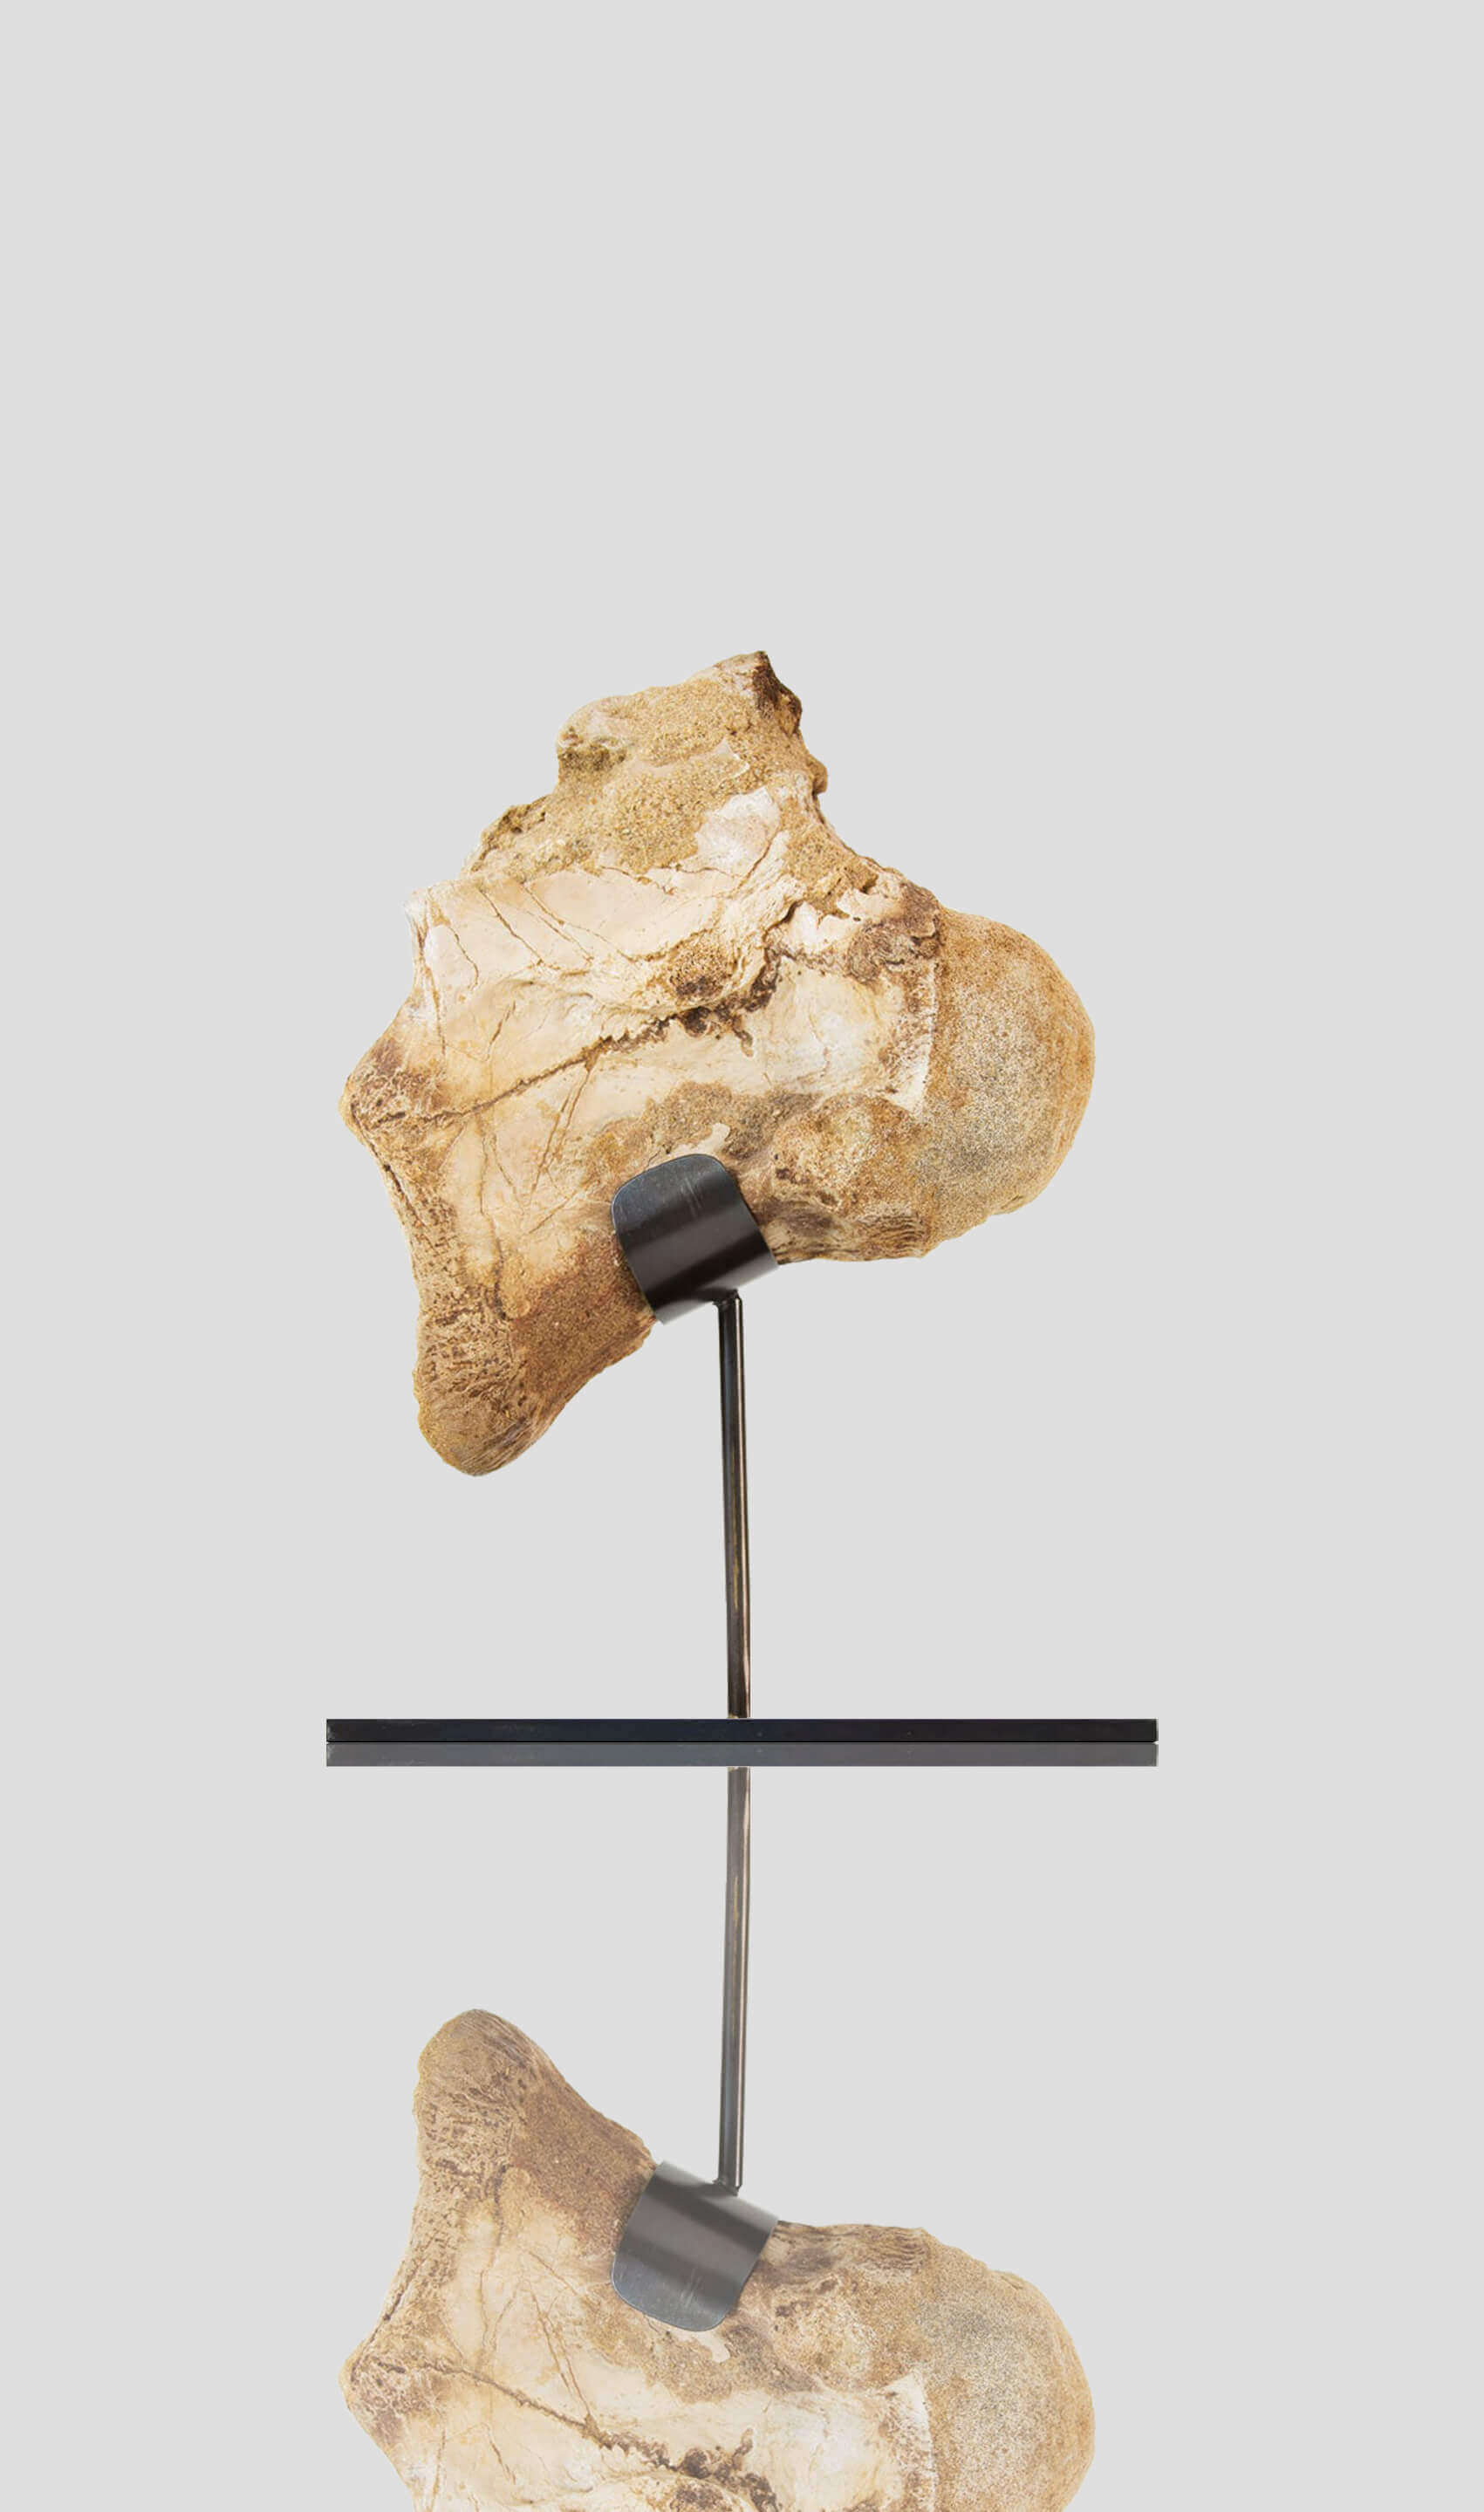 dinosaur vertebra for sale on bronze stand for interior fossil display 35